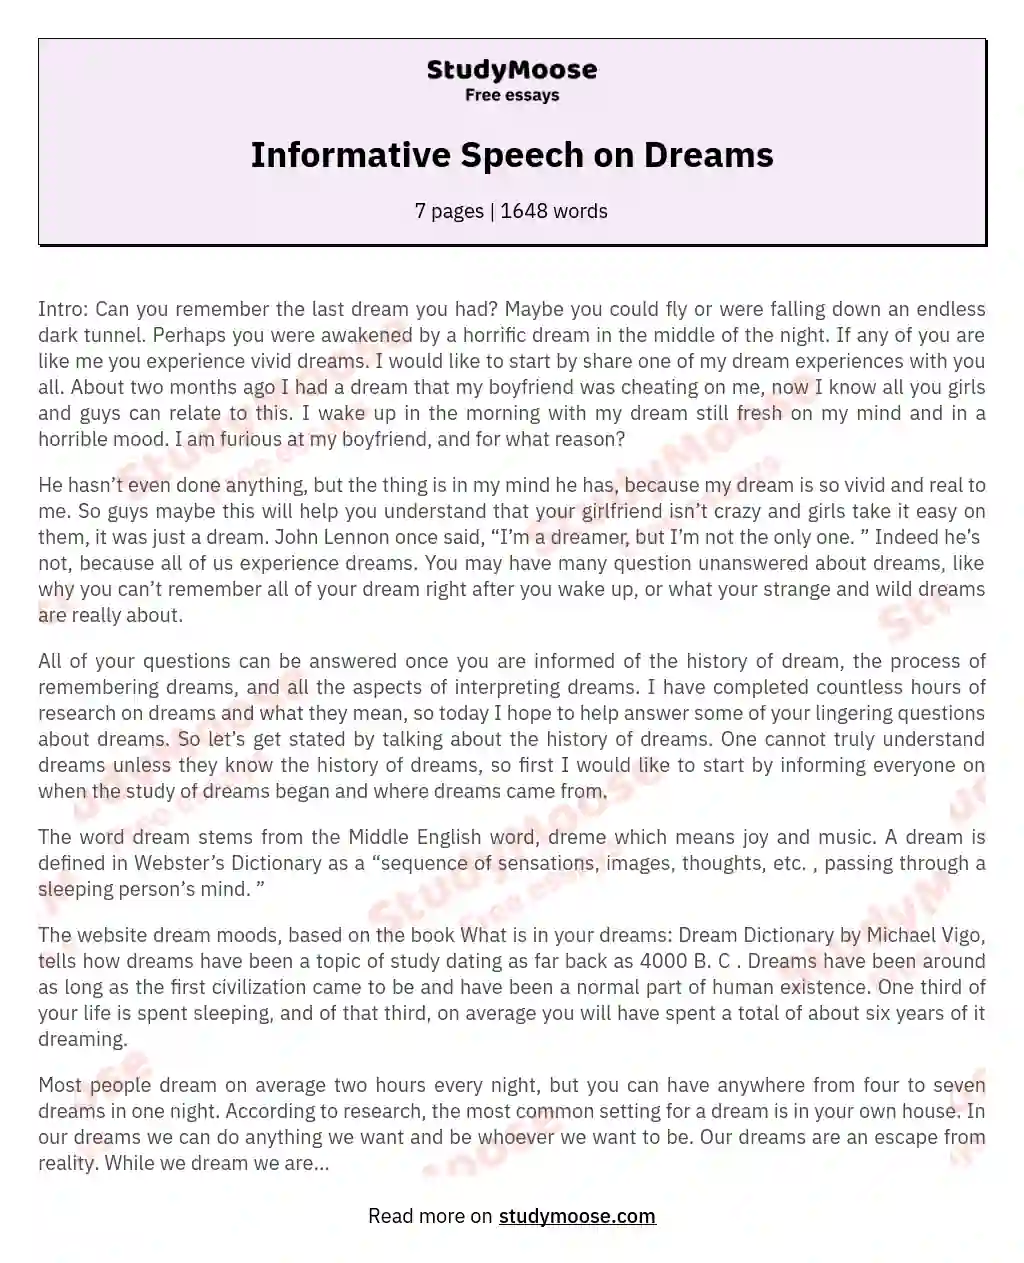 Informative Speech on Dreams essay